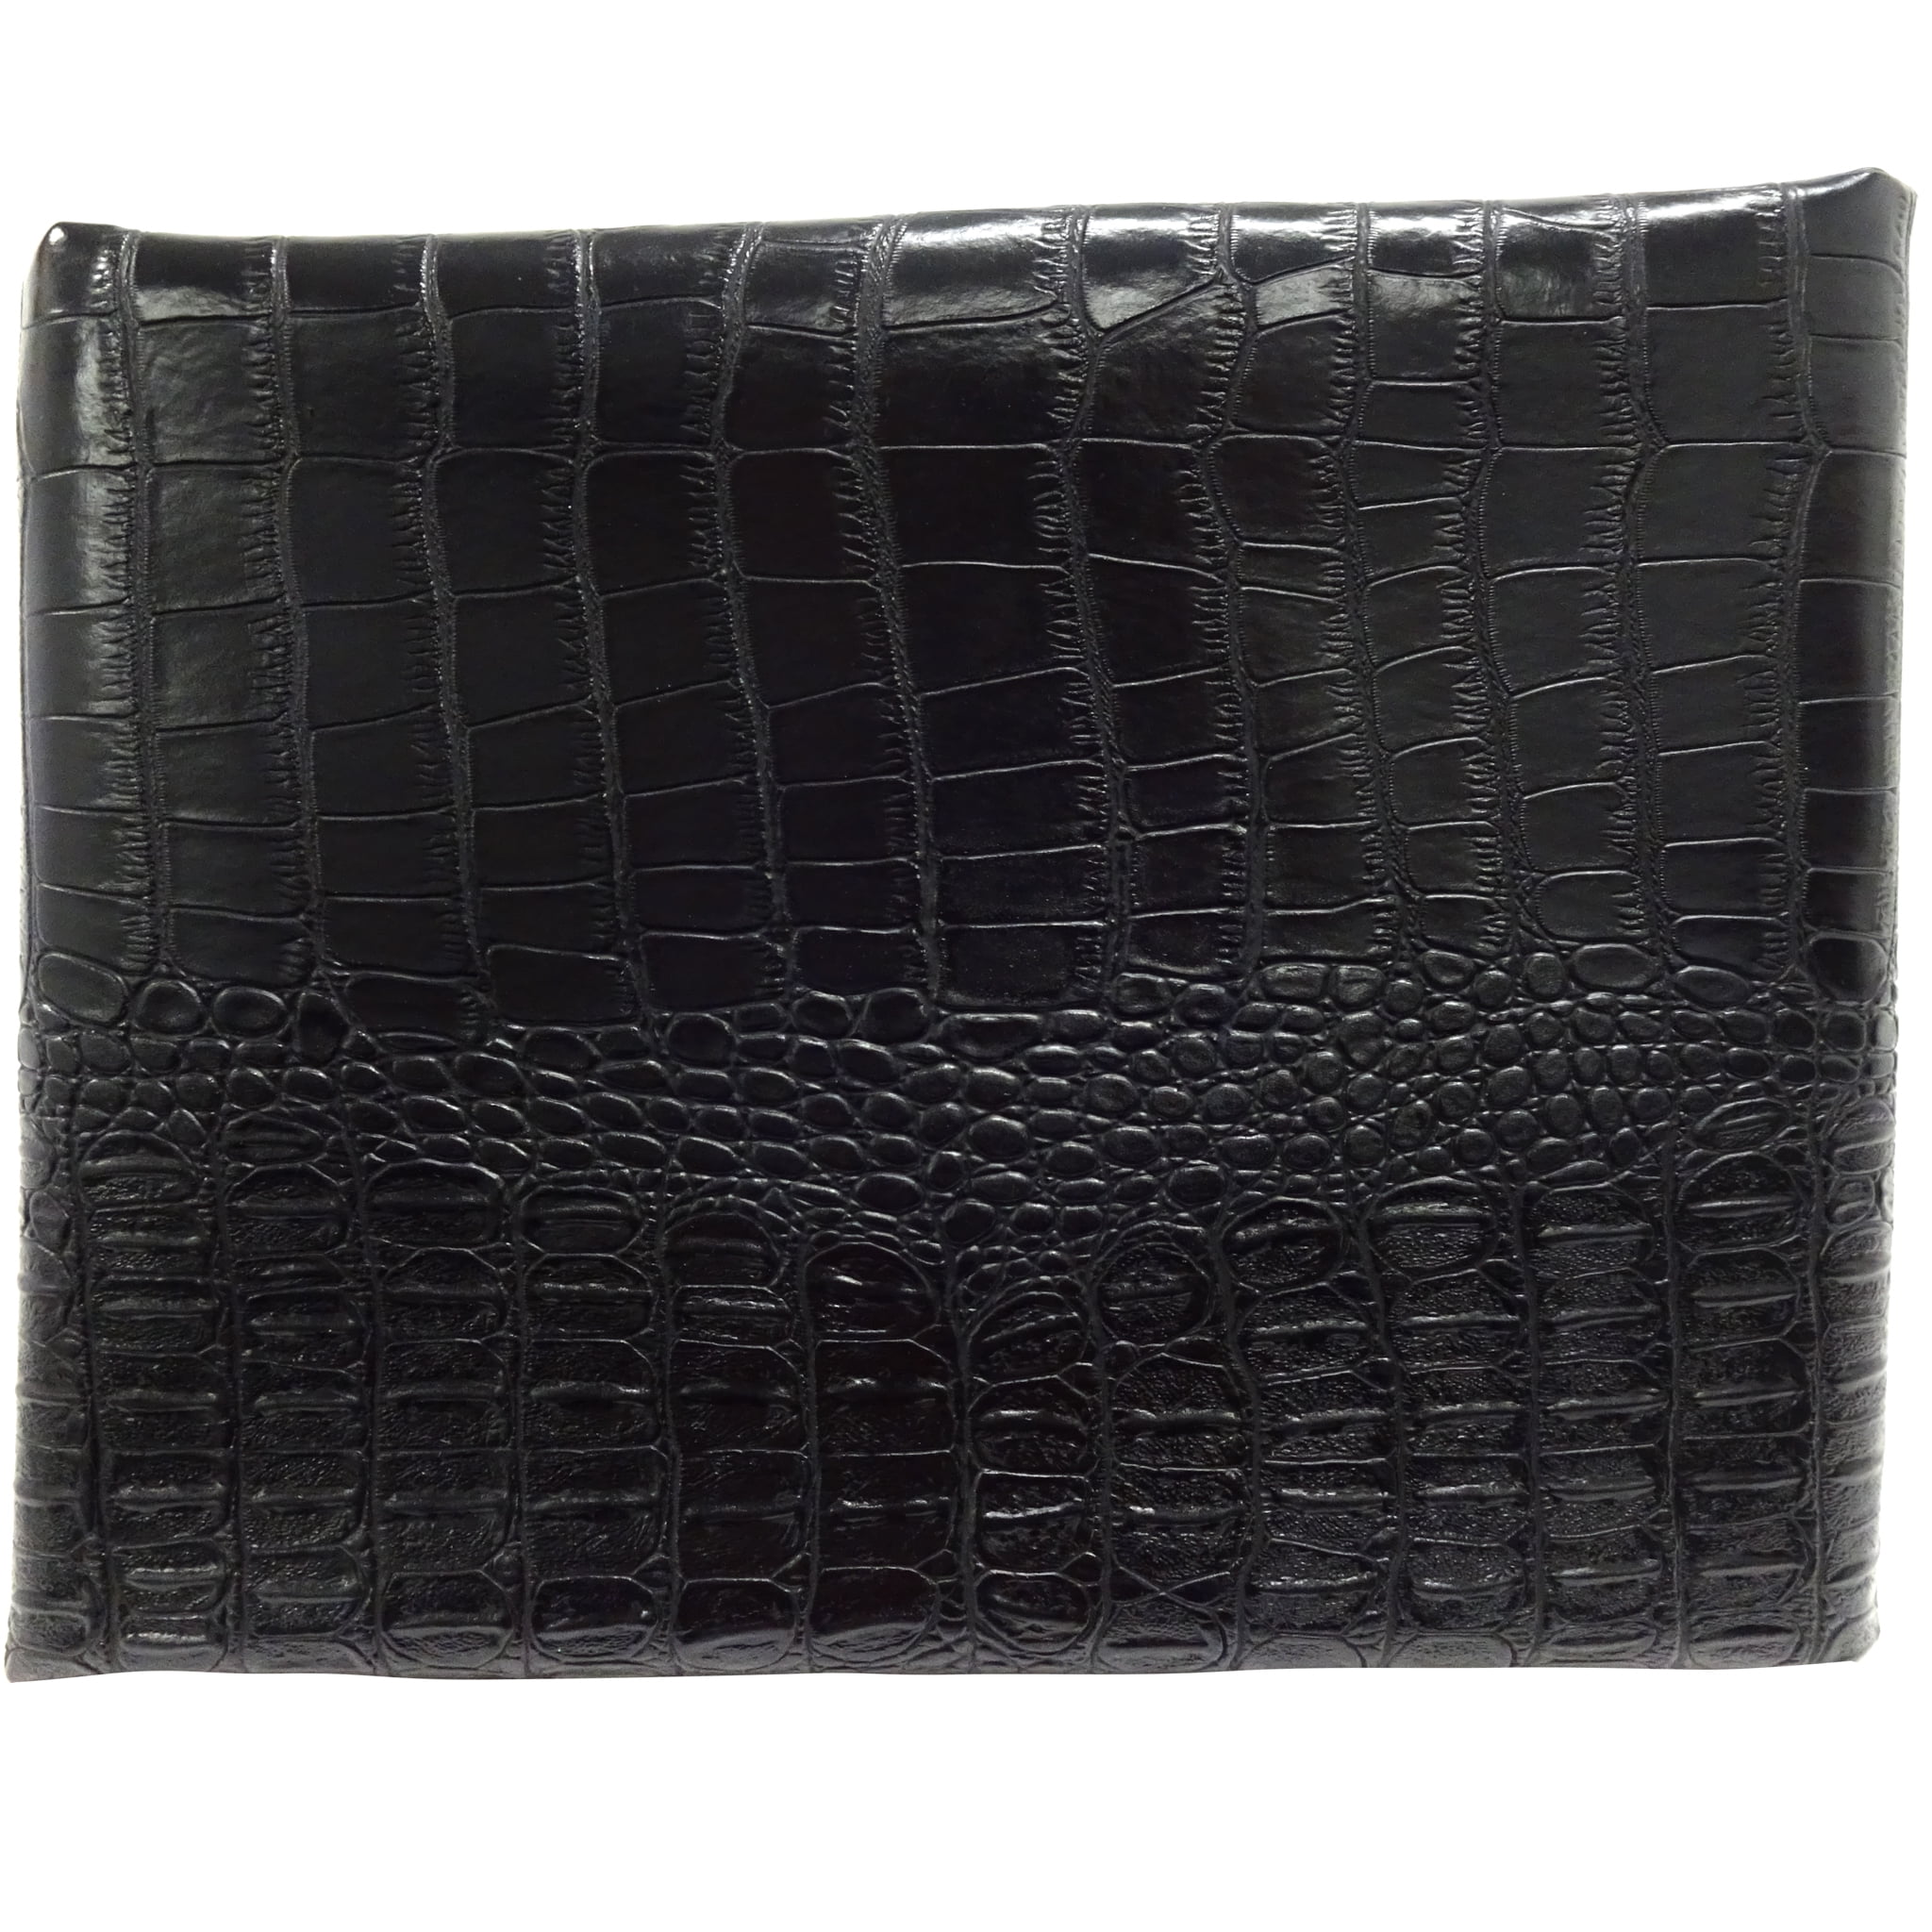 SHASON Textile Faux Leather Crocodile 2 Tones Print Upholstery Fabric, White/Gold.